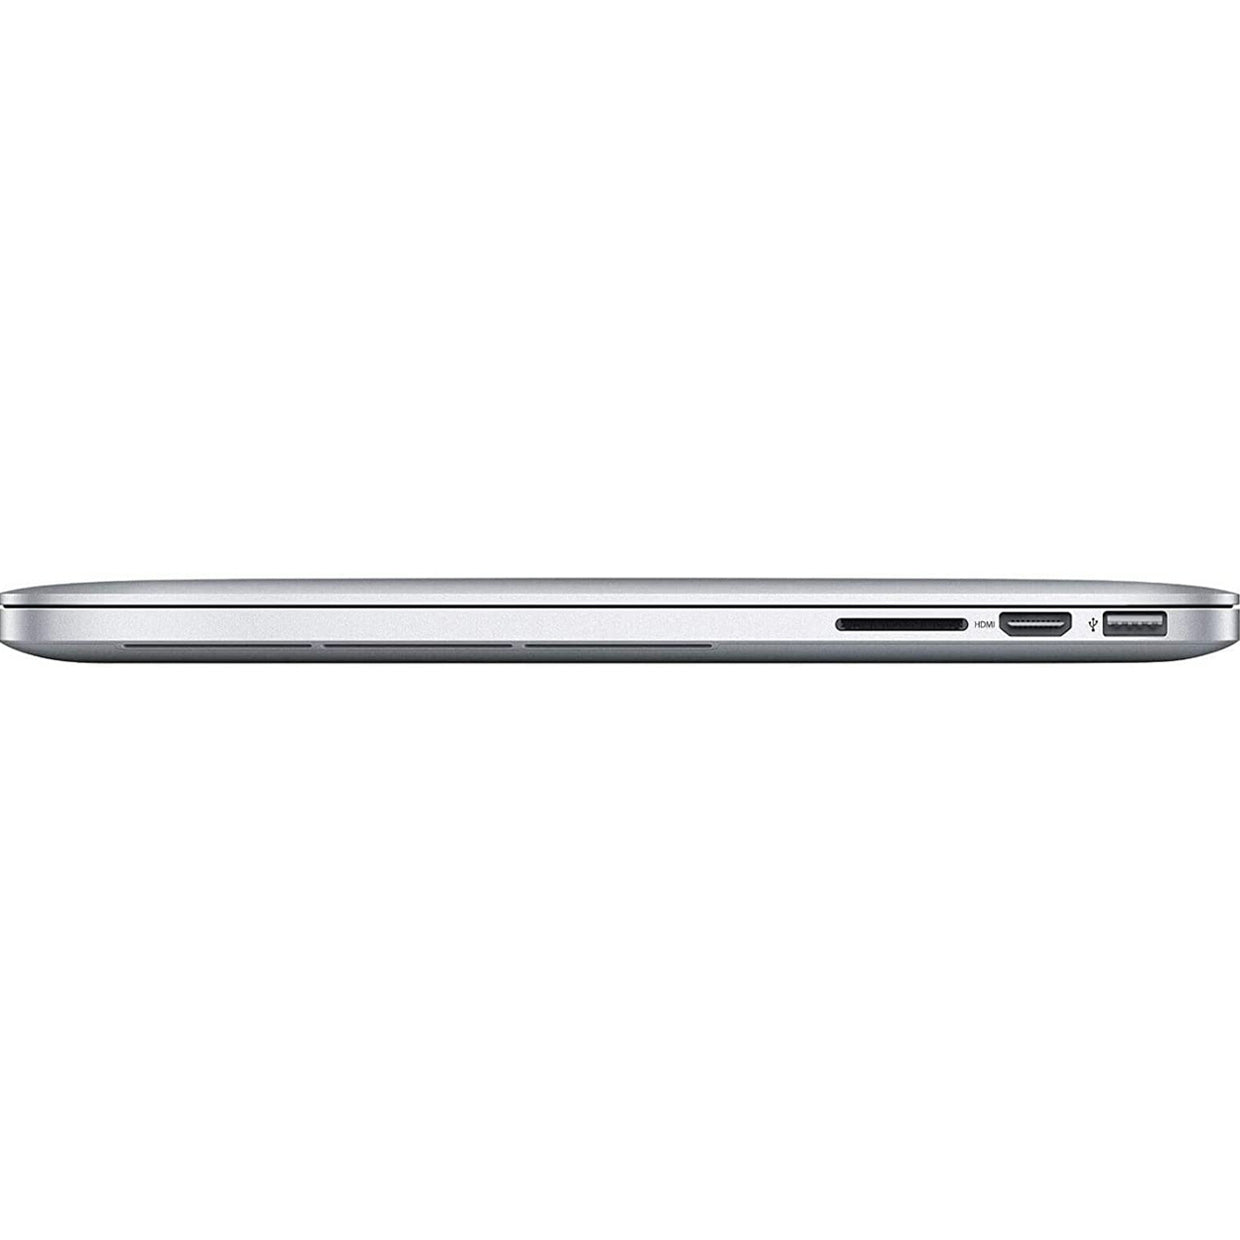 Apple MacBook A1398, 2015, i7, 16GB, 1TBSSD, Silver